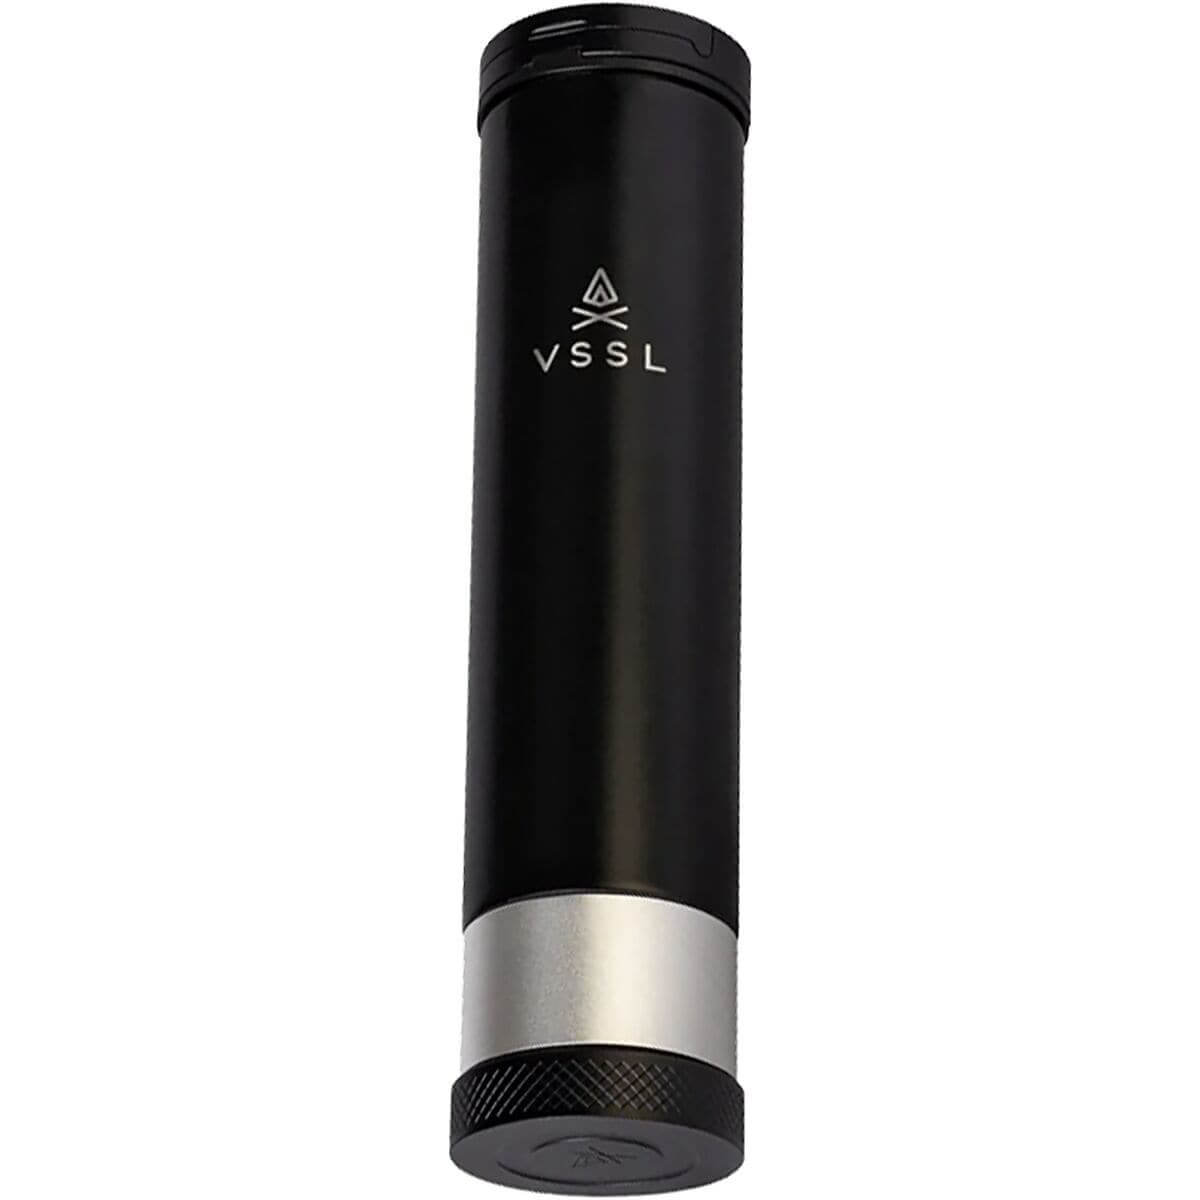 Фляга VSSL Insulated Flask, черный